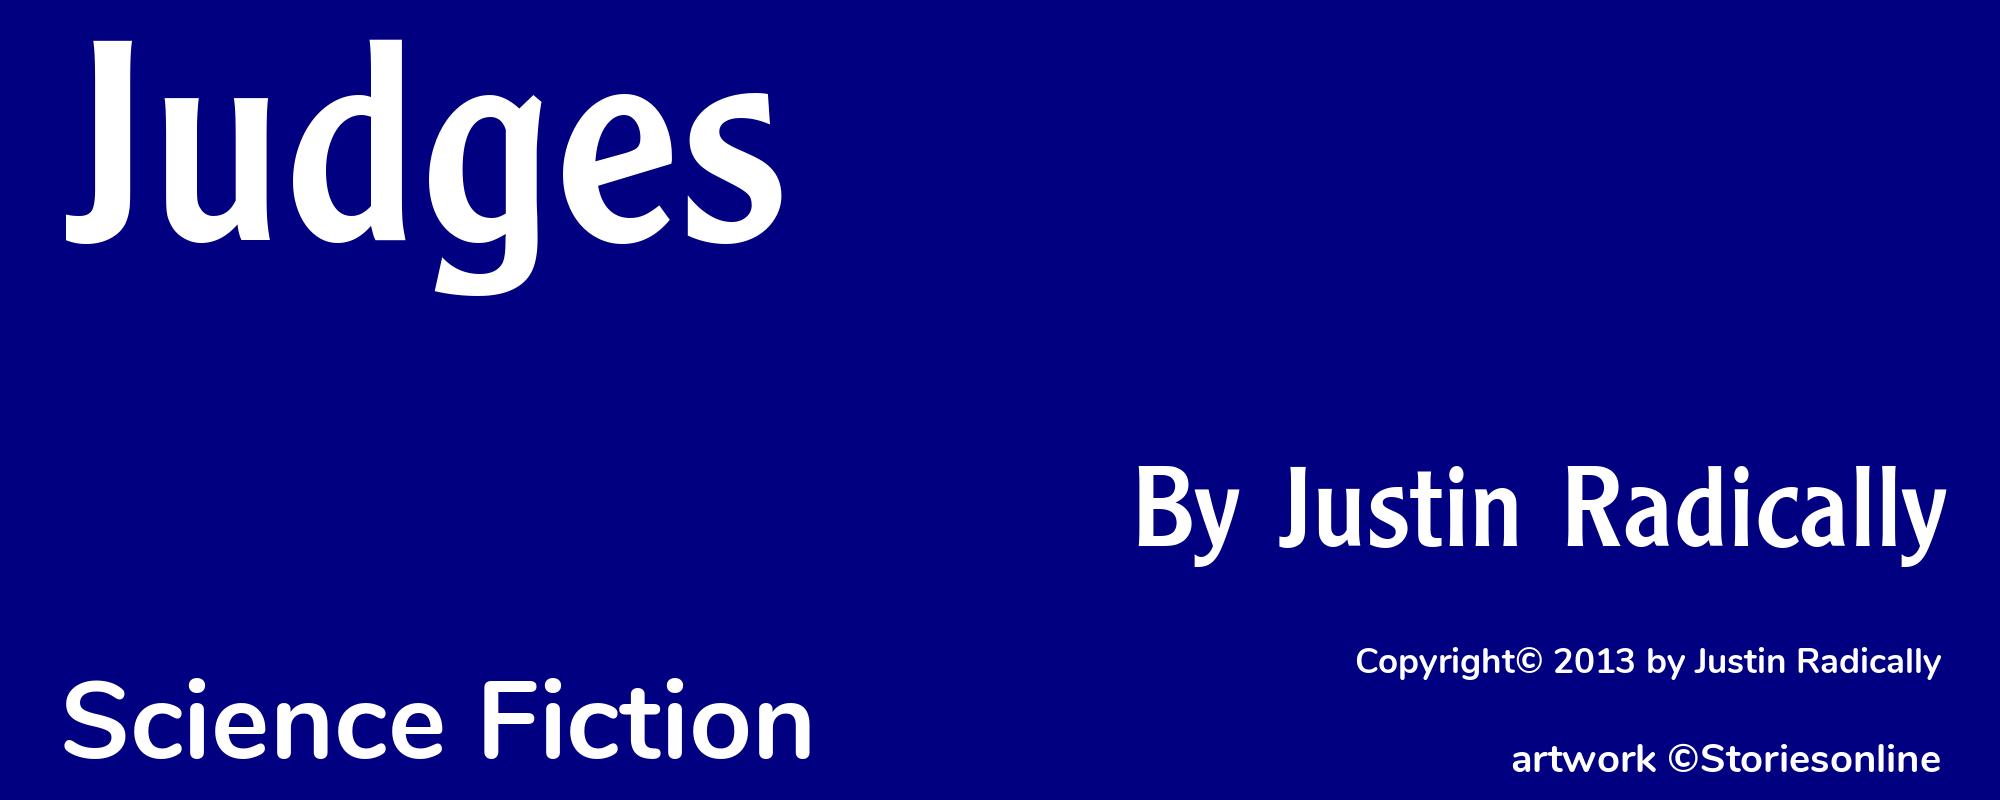 Judges - Cover